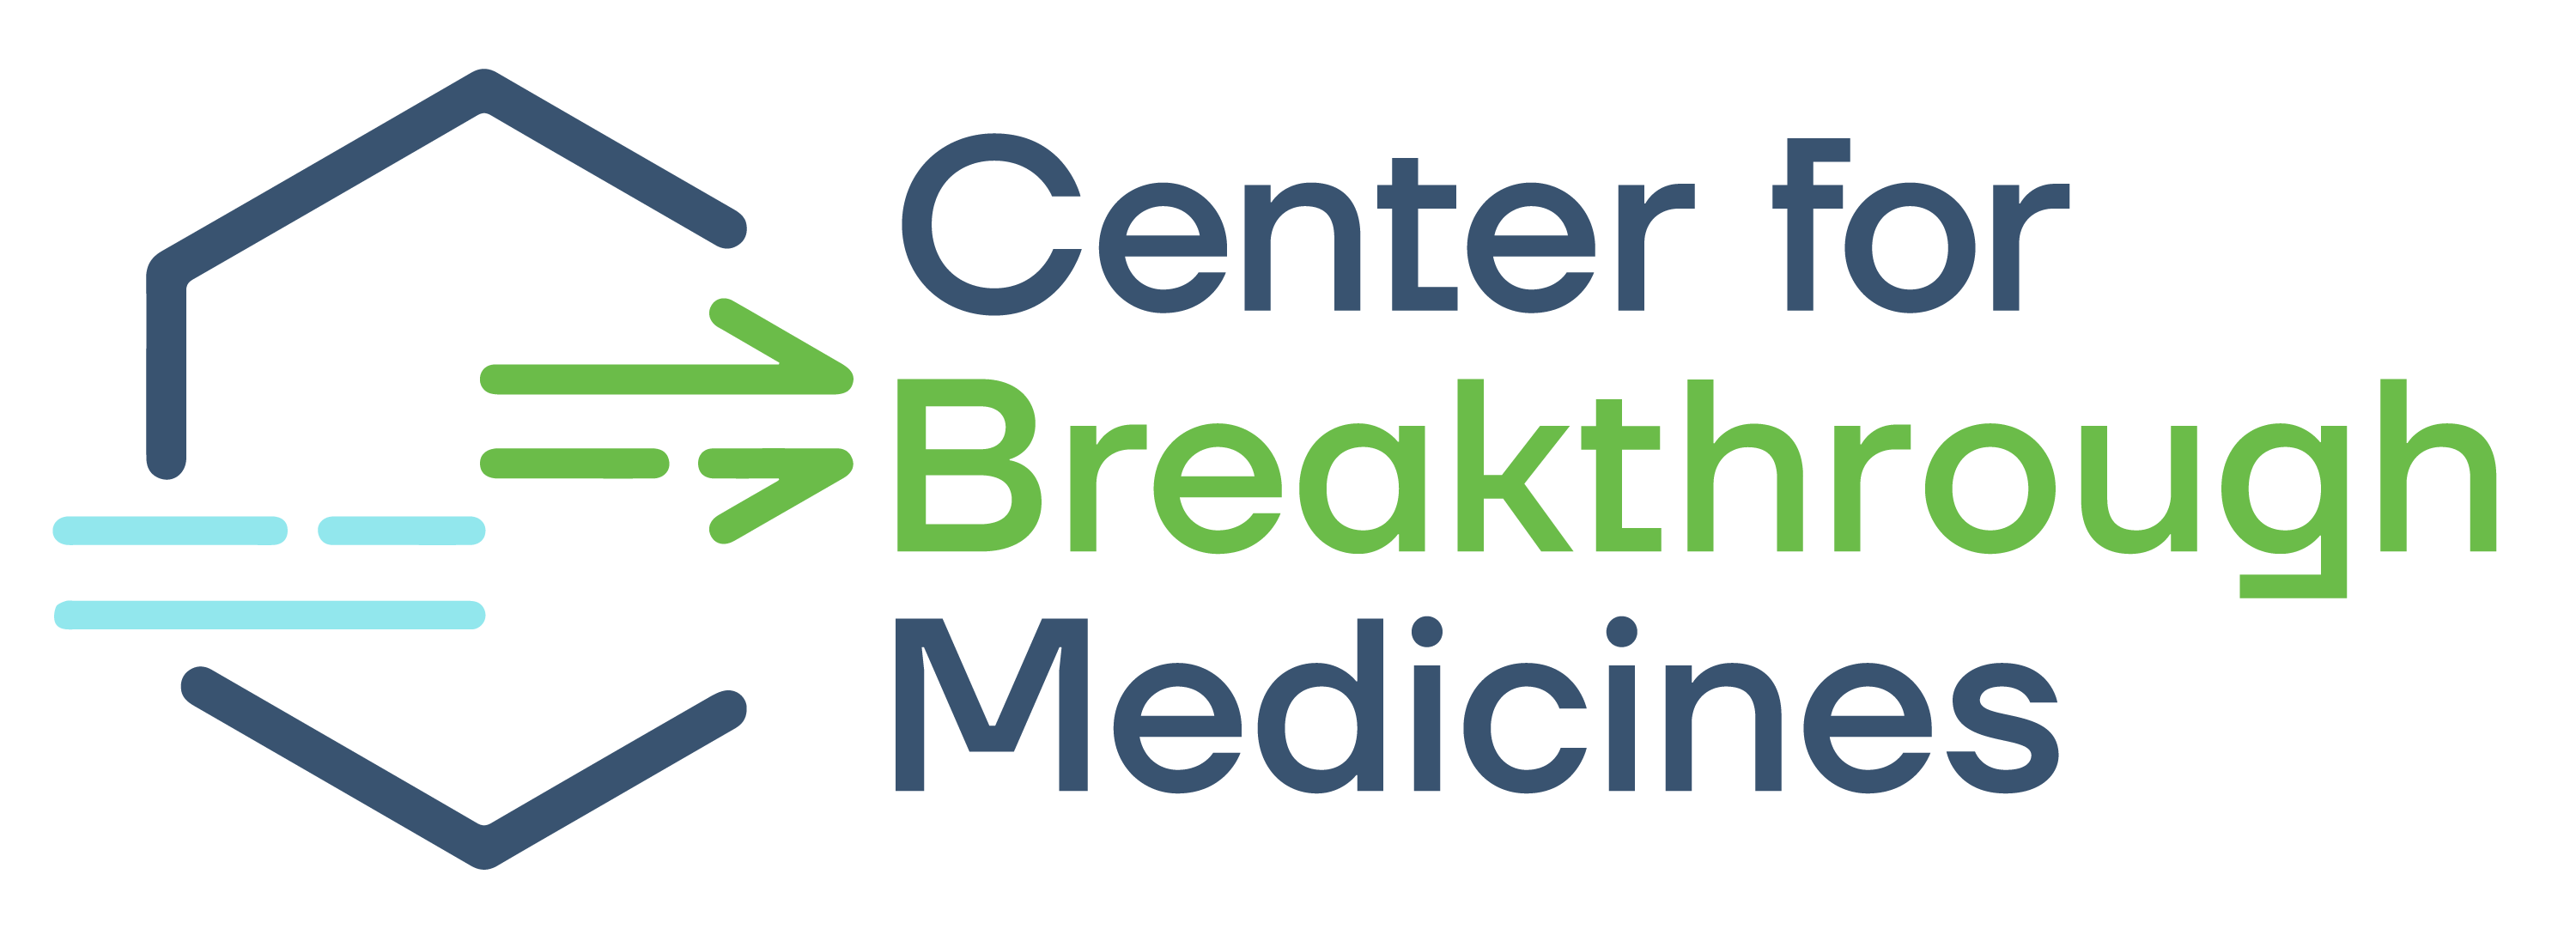 CenterforBreakthroughMedicine-web-logo_dec2021